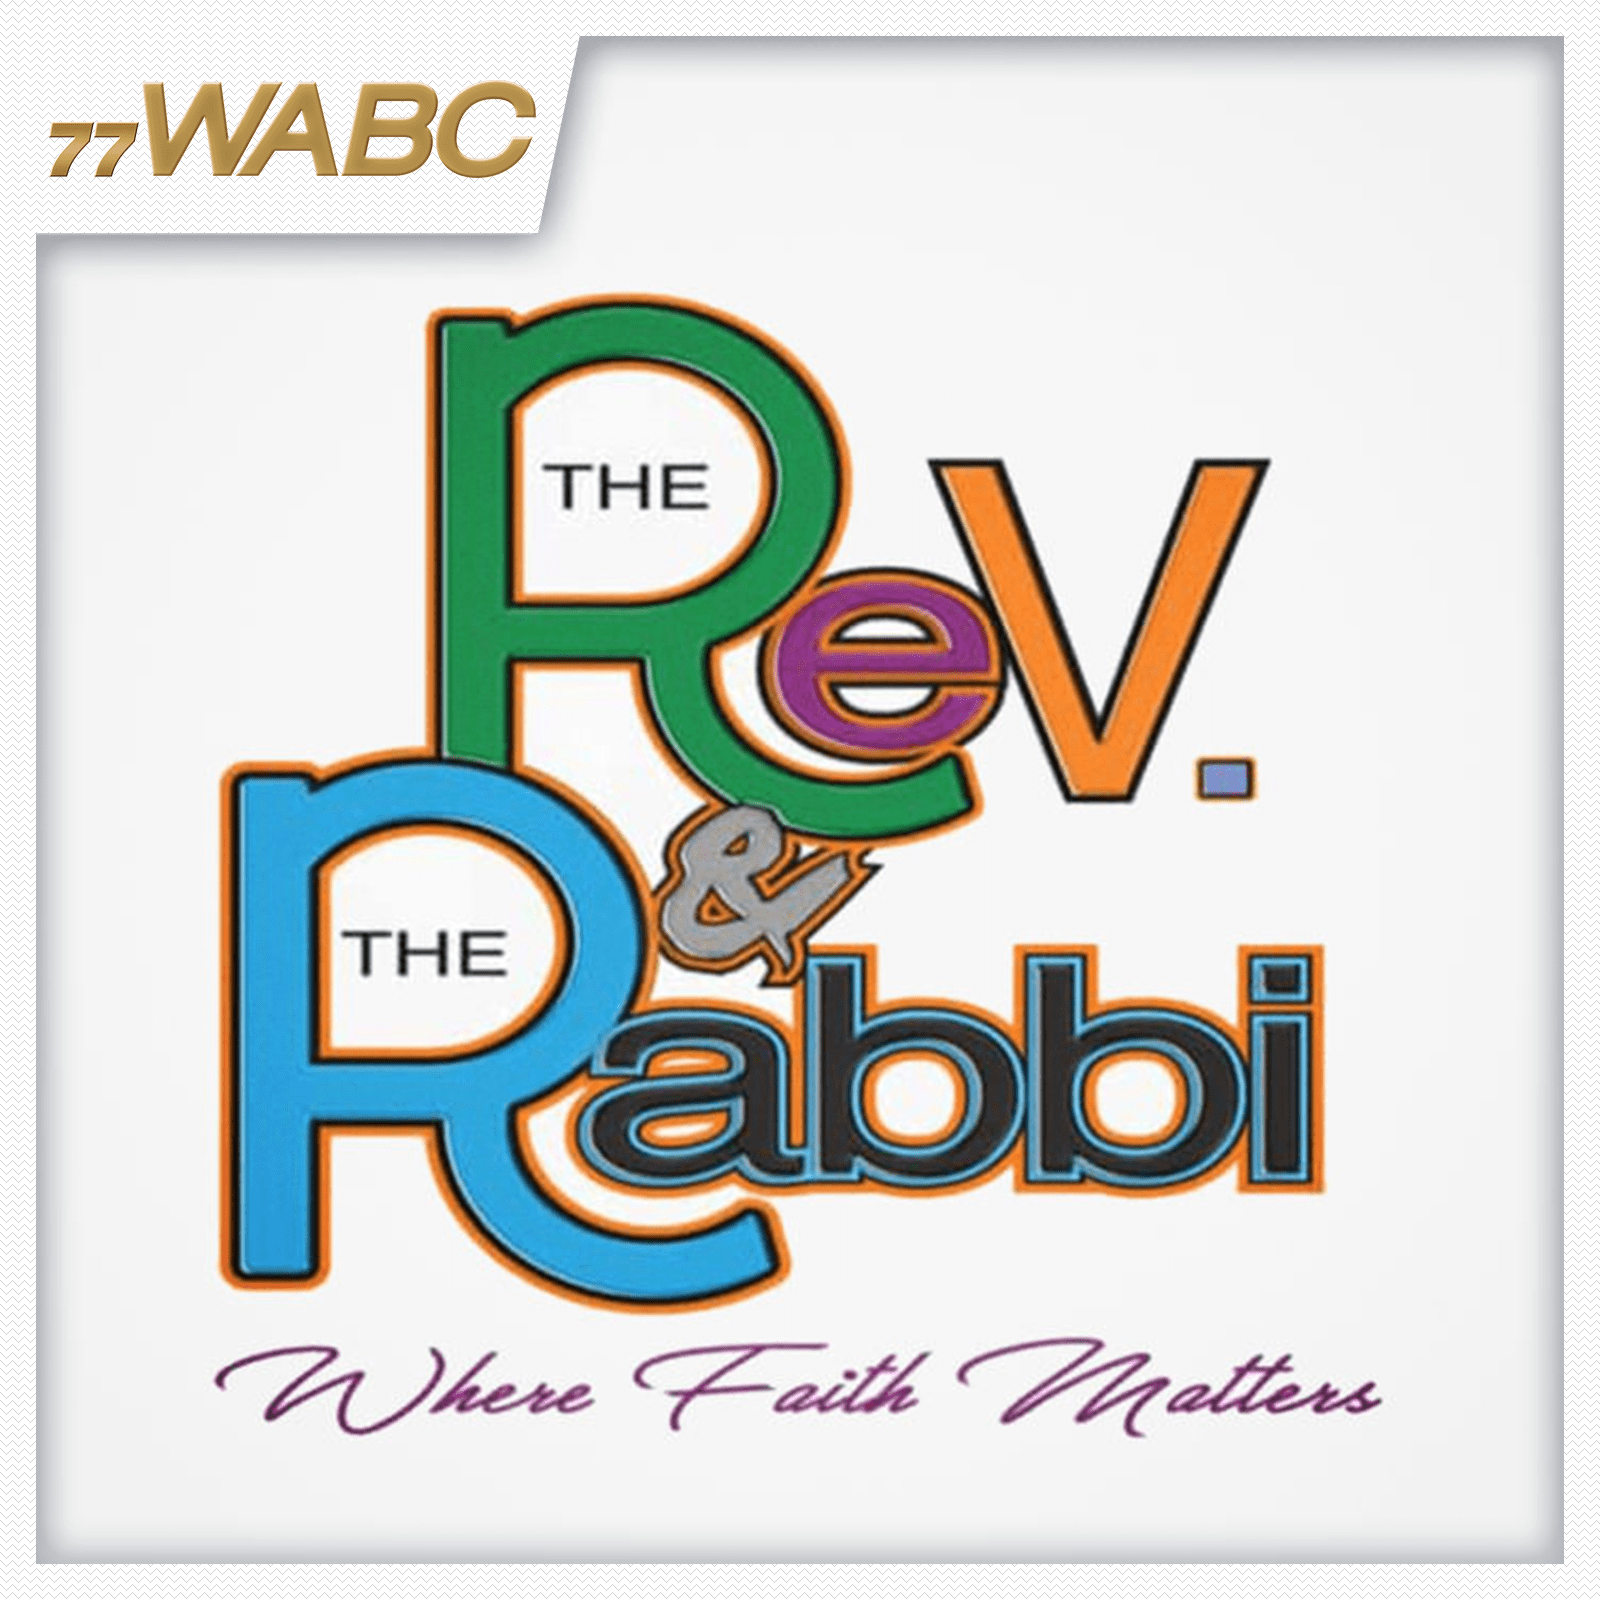 rev-and-the-rabbi-new-logo134598